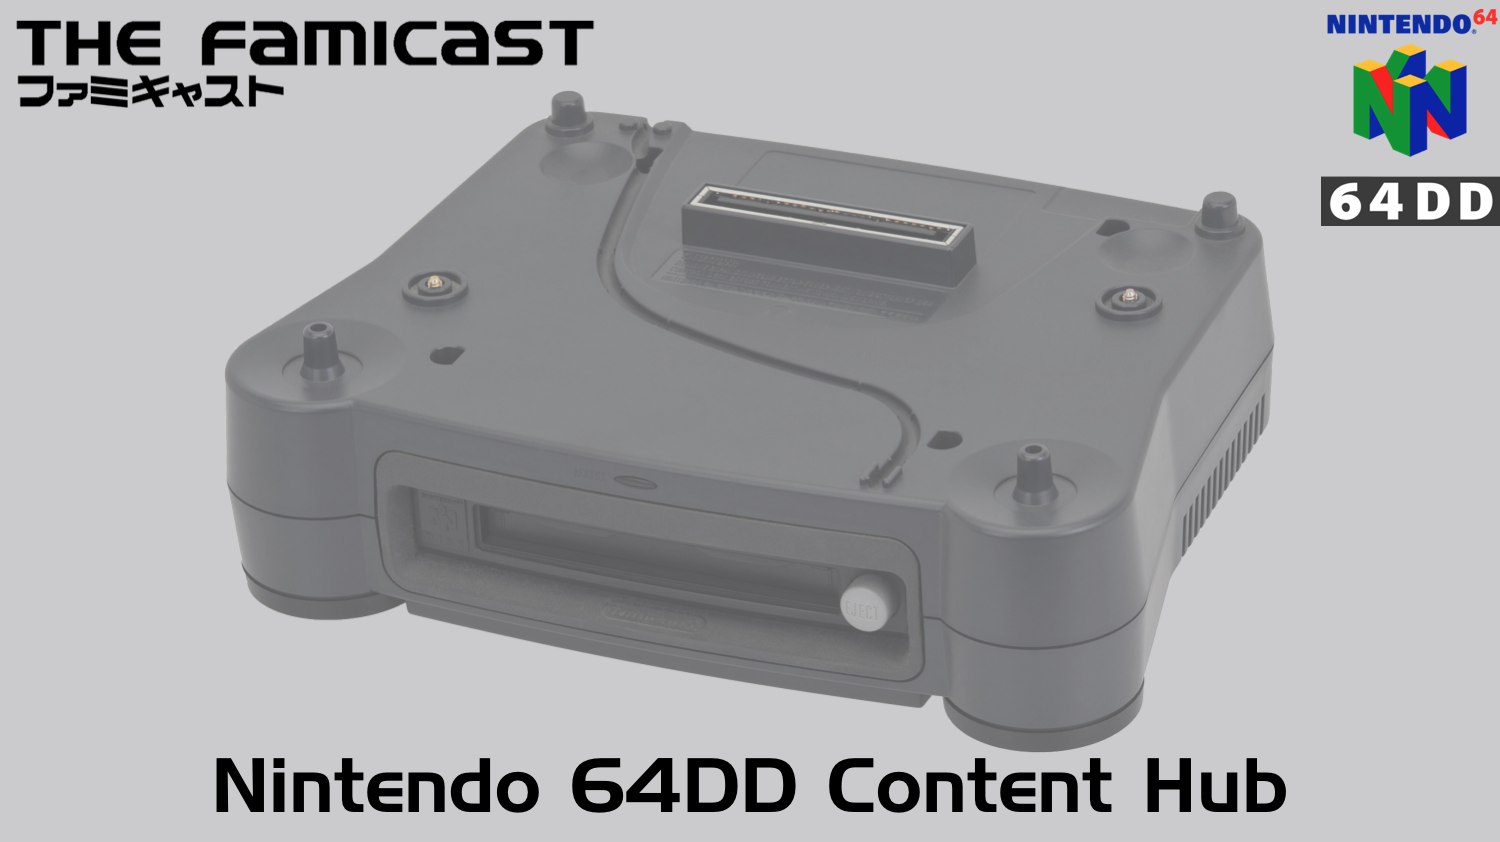 Nintendo 64DD Content Hub Page